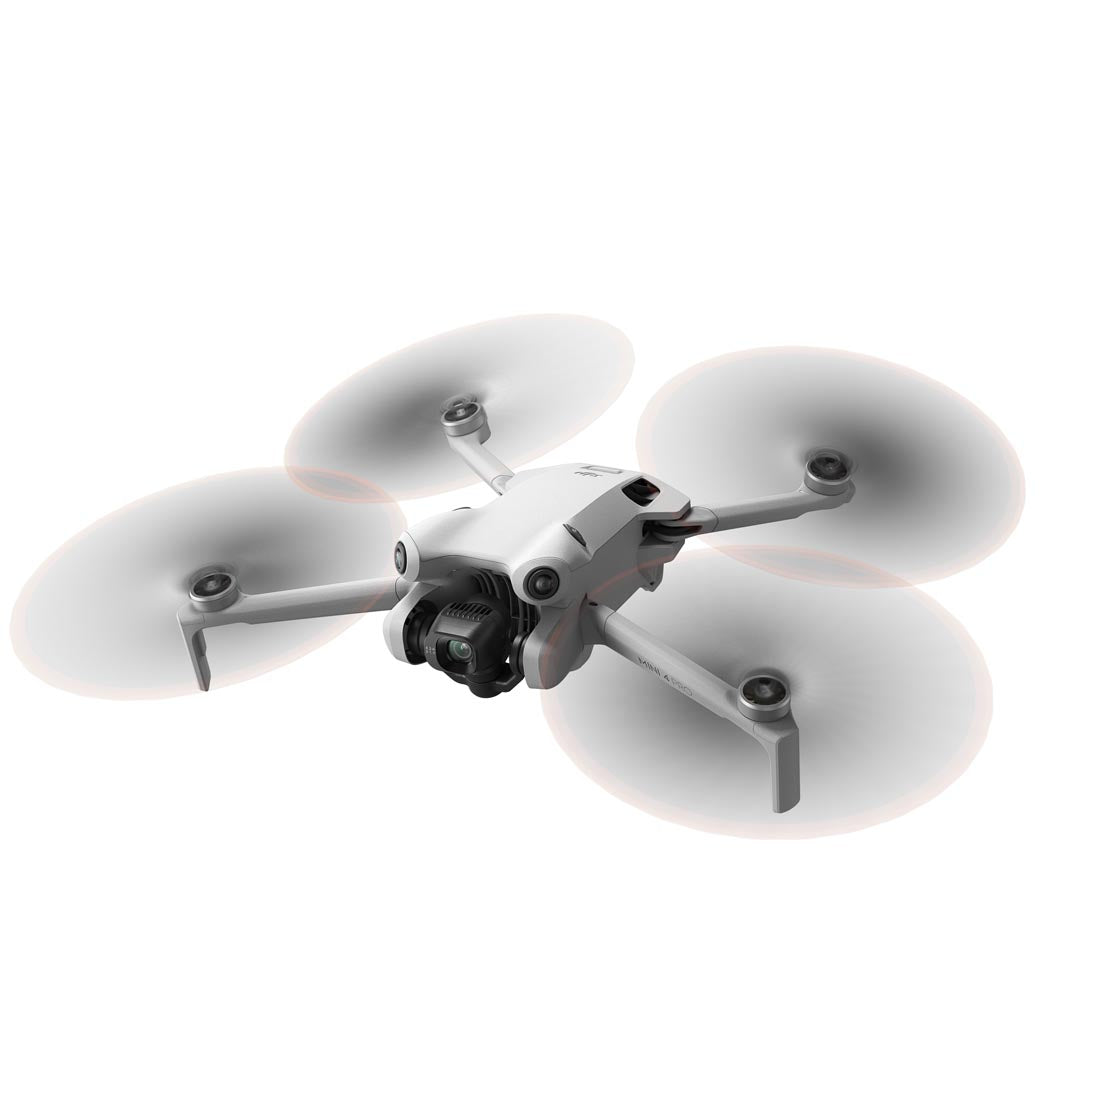 DJI Mini 4 Pro Drone with Remote Control Gray CP.MA.00000731.01 - Best Buy